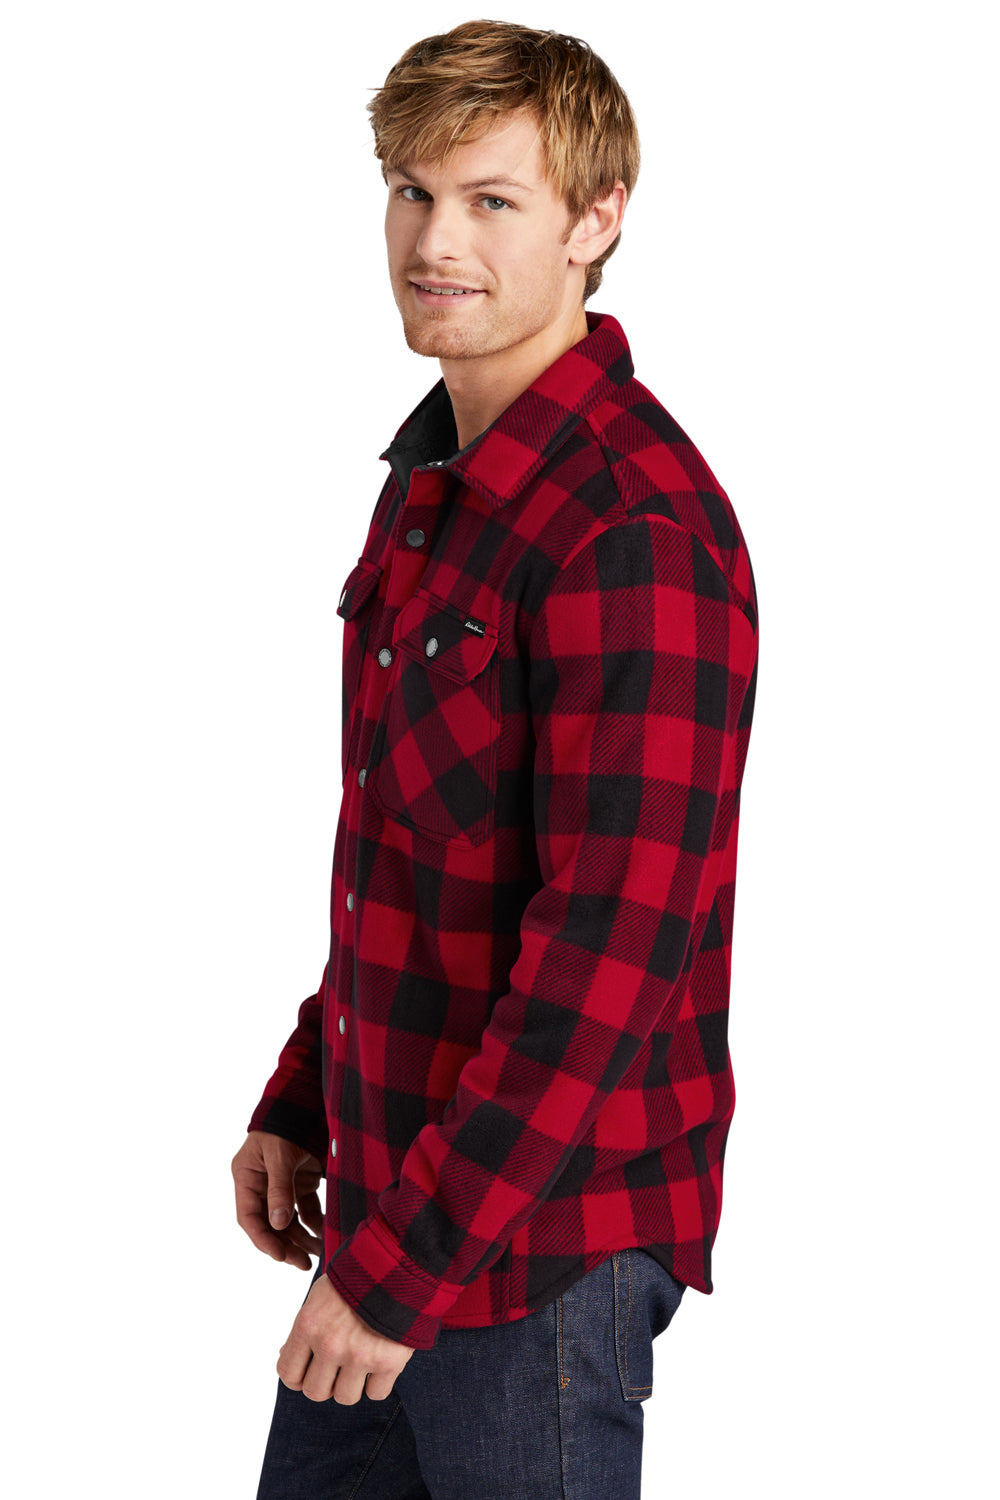 Eddie Bauer EB228 Mens Woodland Snap Front Shirt Jacket w/ Double Pockets Radish Red/Black Model Side